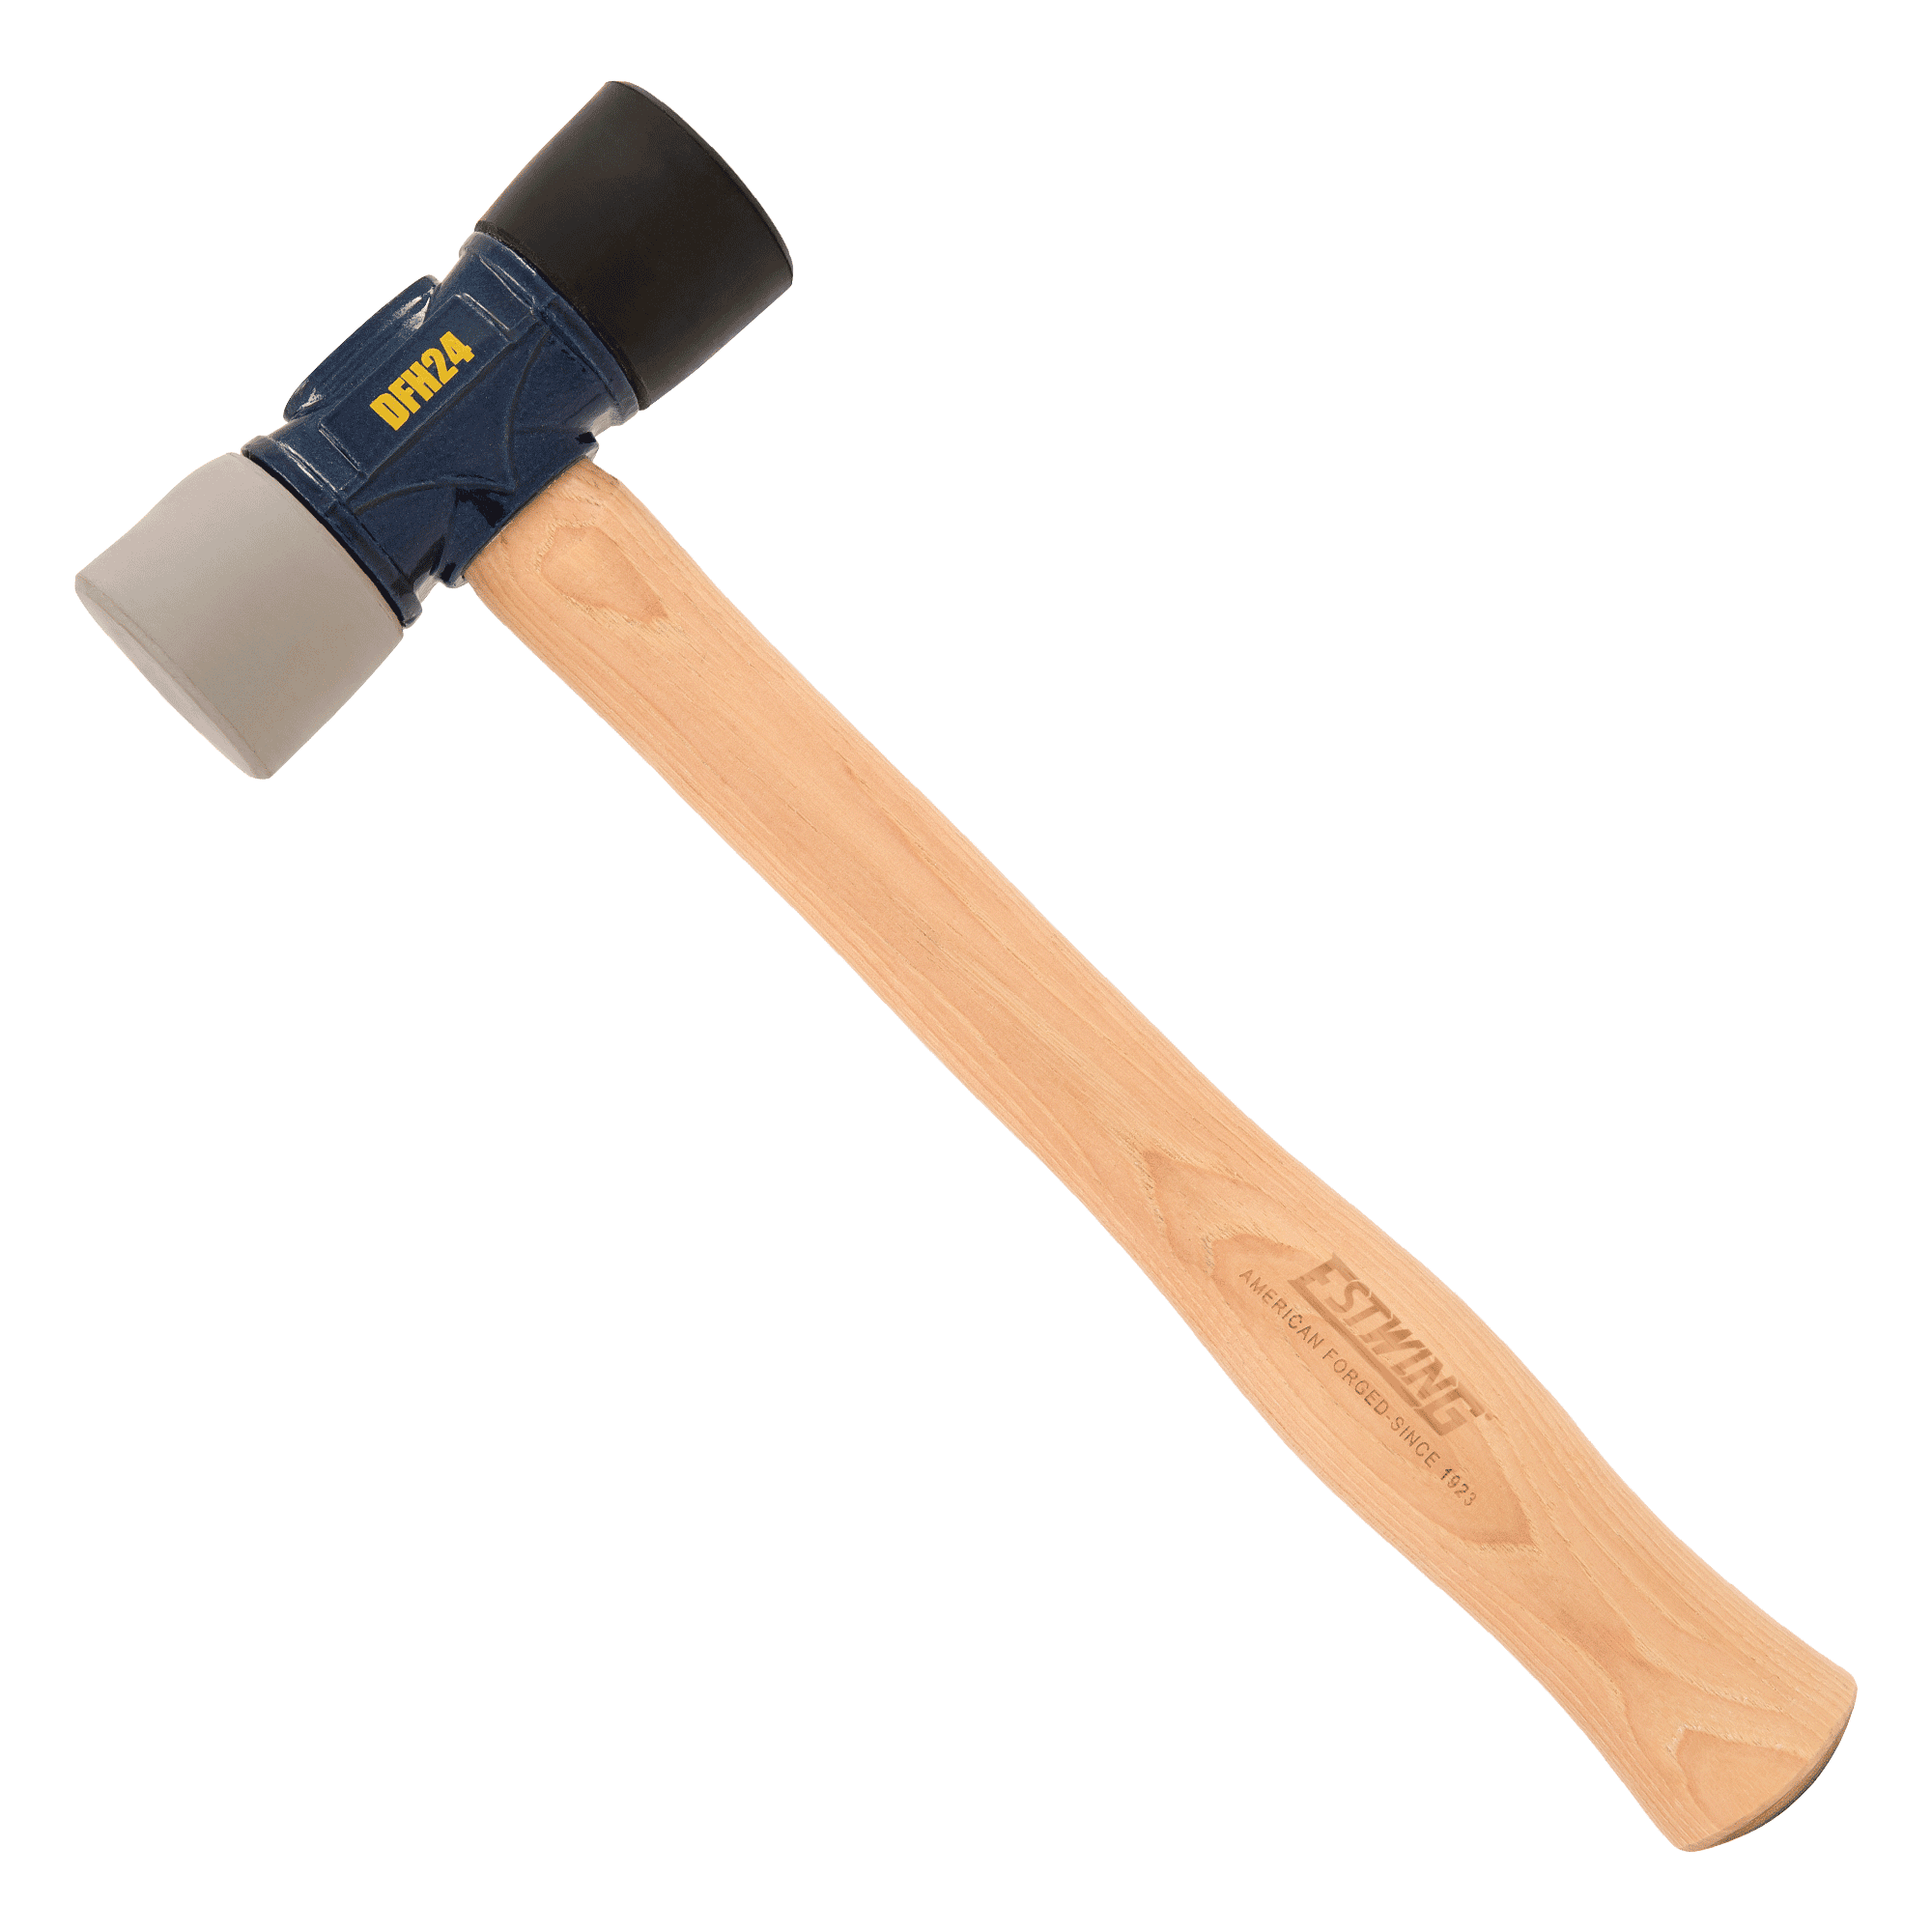 Rubber Mallet Hammer (Black & Gray) - Estwing